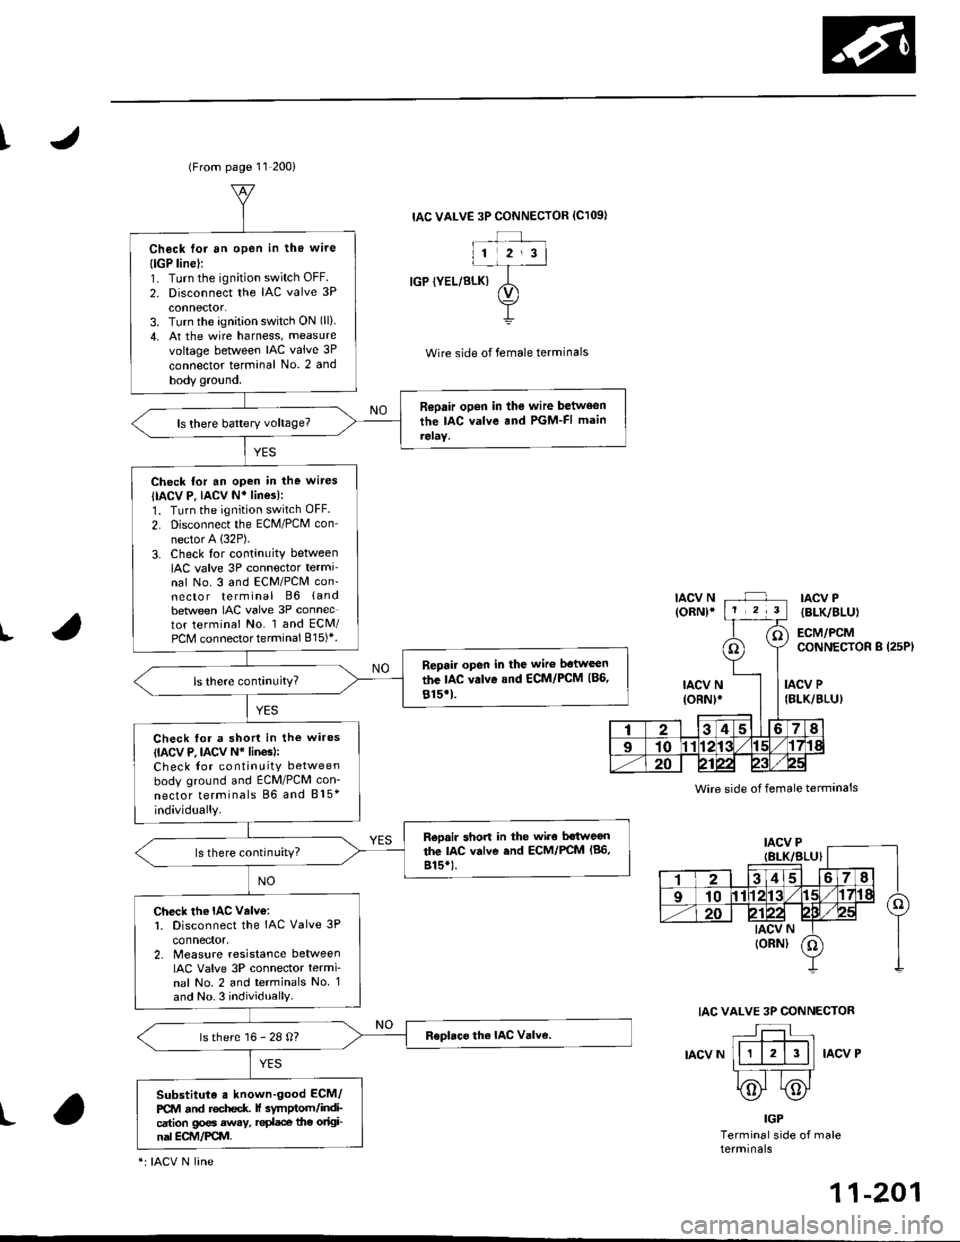 HONDA CIVIC 1996 6.G Workshop Manual I
I
L
IACV N(oRN)*IACV P{BLK/BLU
ECM/PCMCONNECTON B (25PI
IACV N(oRNt.
Wire side of female terminals
IAC VALVE 3P CONNECTOR
IACV NIACV P
IACV P
IBLK/BLUI
IGP
Terminal side of male
(From page 11 200)
